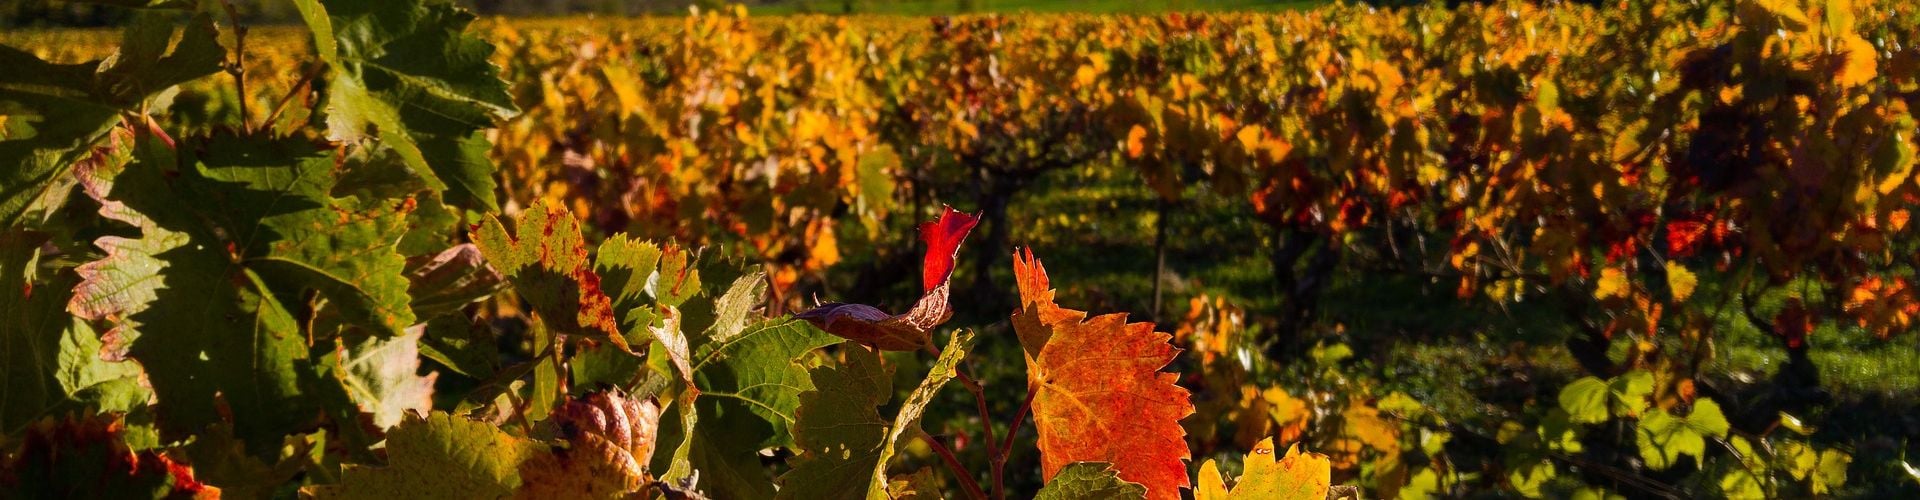 Hérault vignoble automne ceps cépage